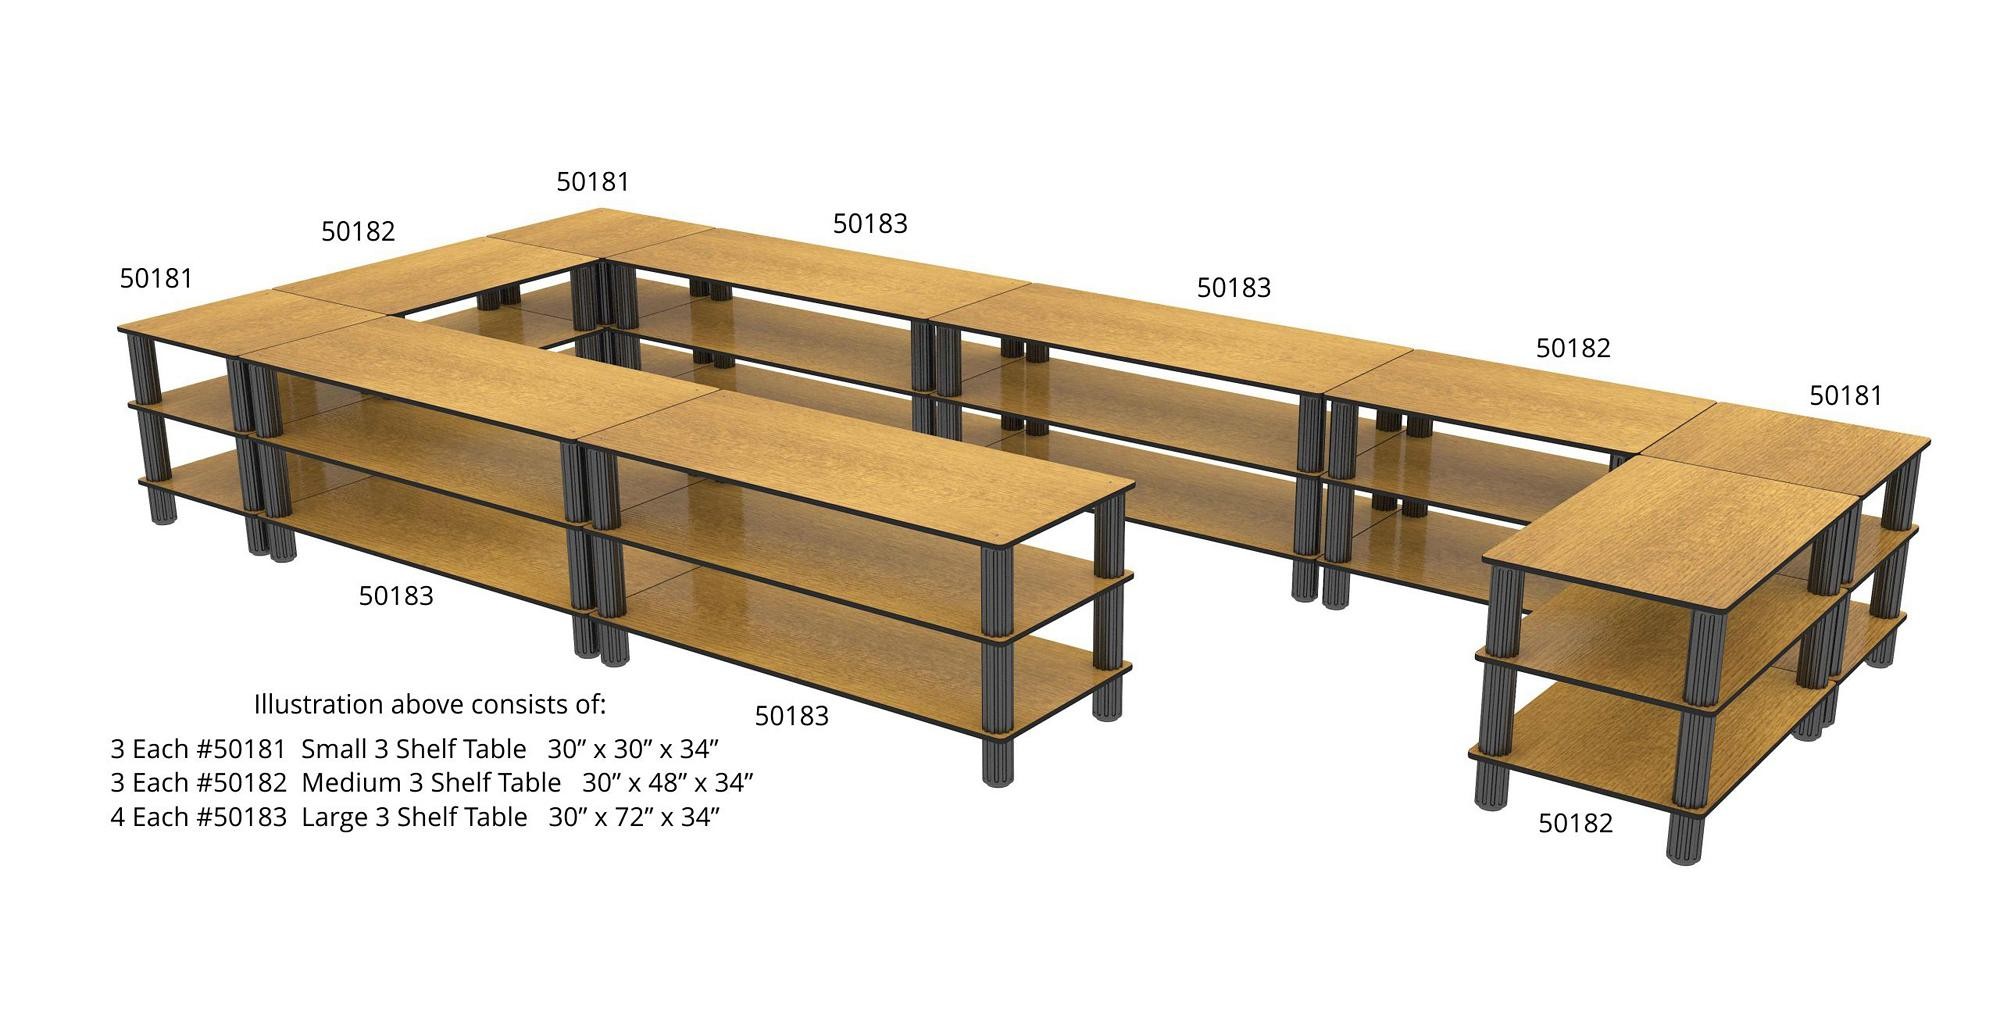 Bon Chef 50181LVWALNUT Small 3-Shelf Flex Table with Walnut Finish, 30" x 30" x 34"